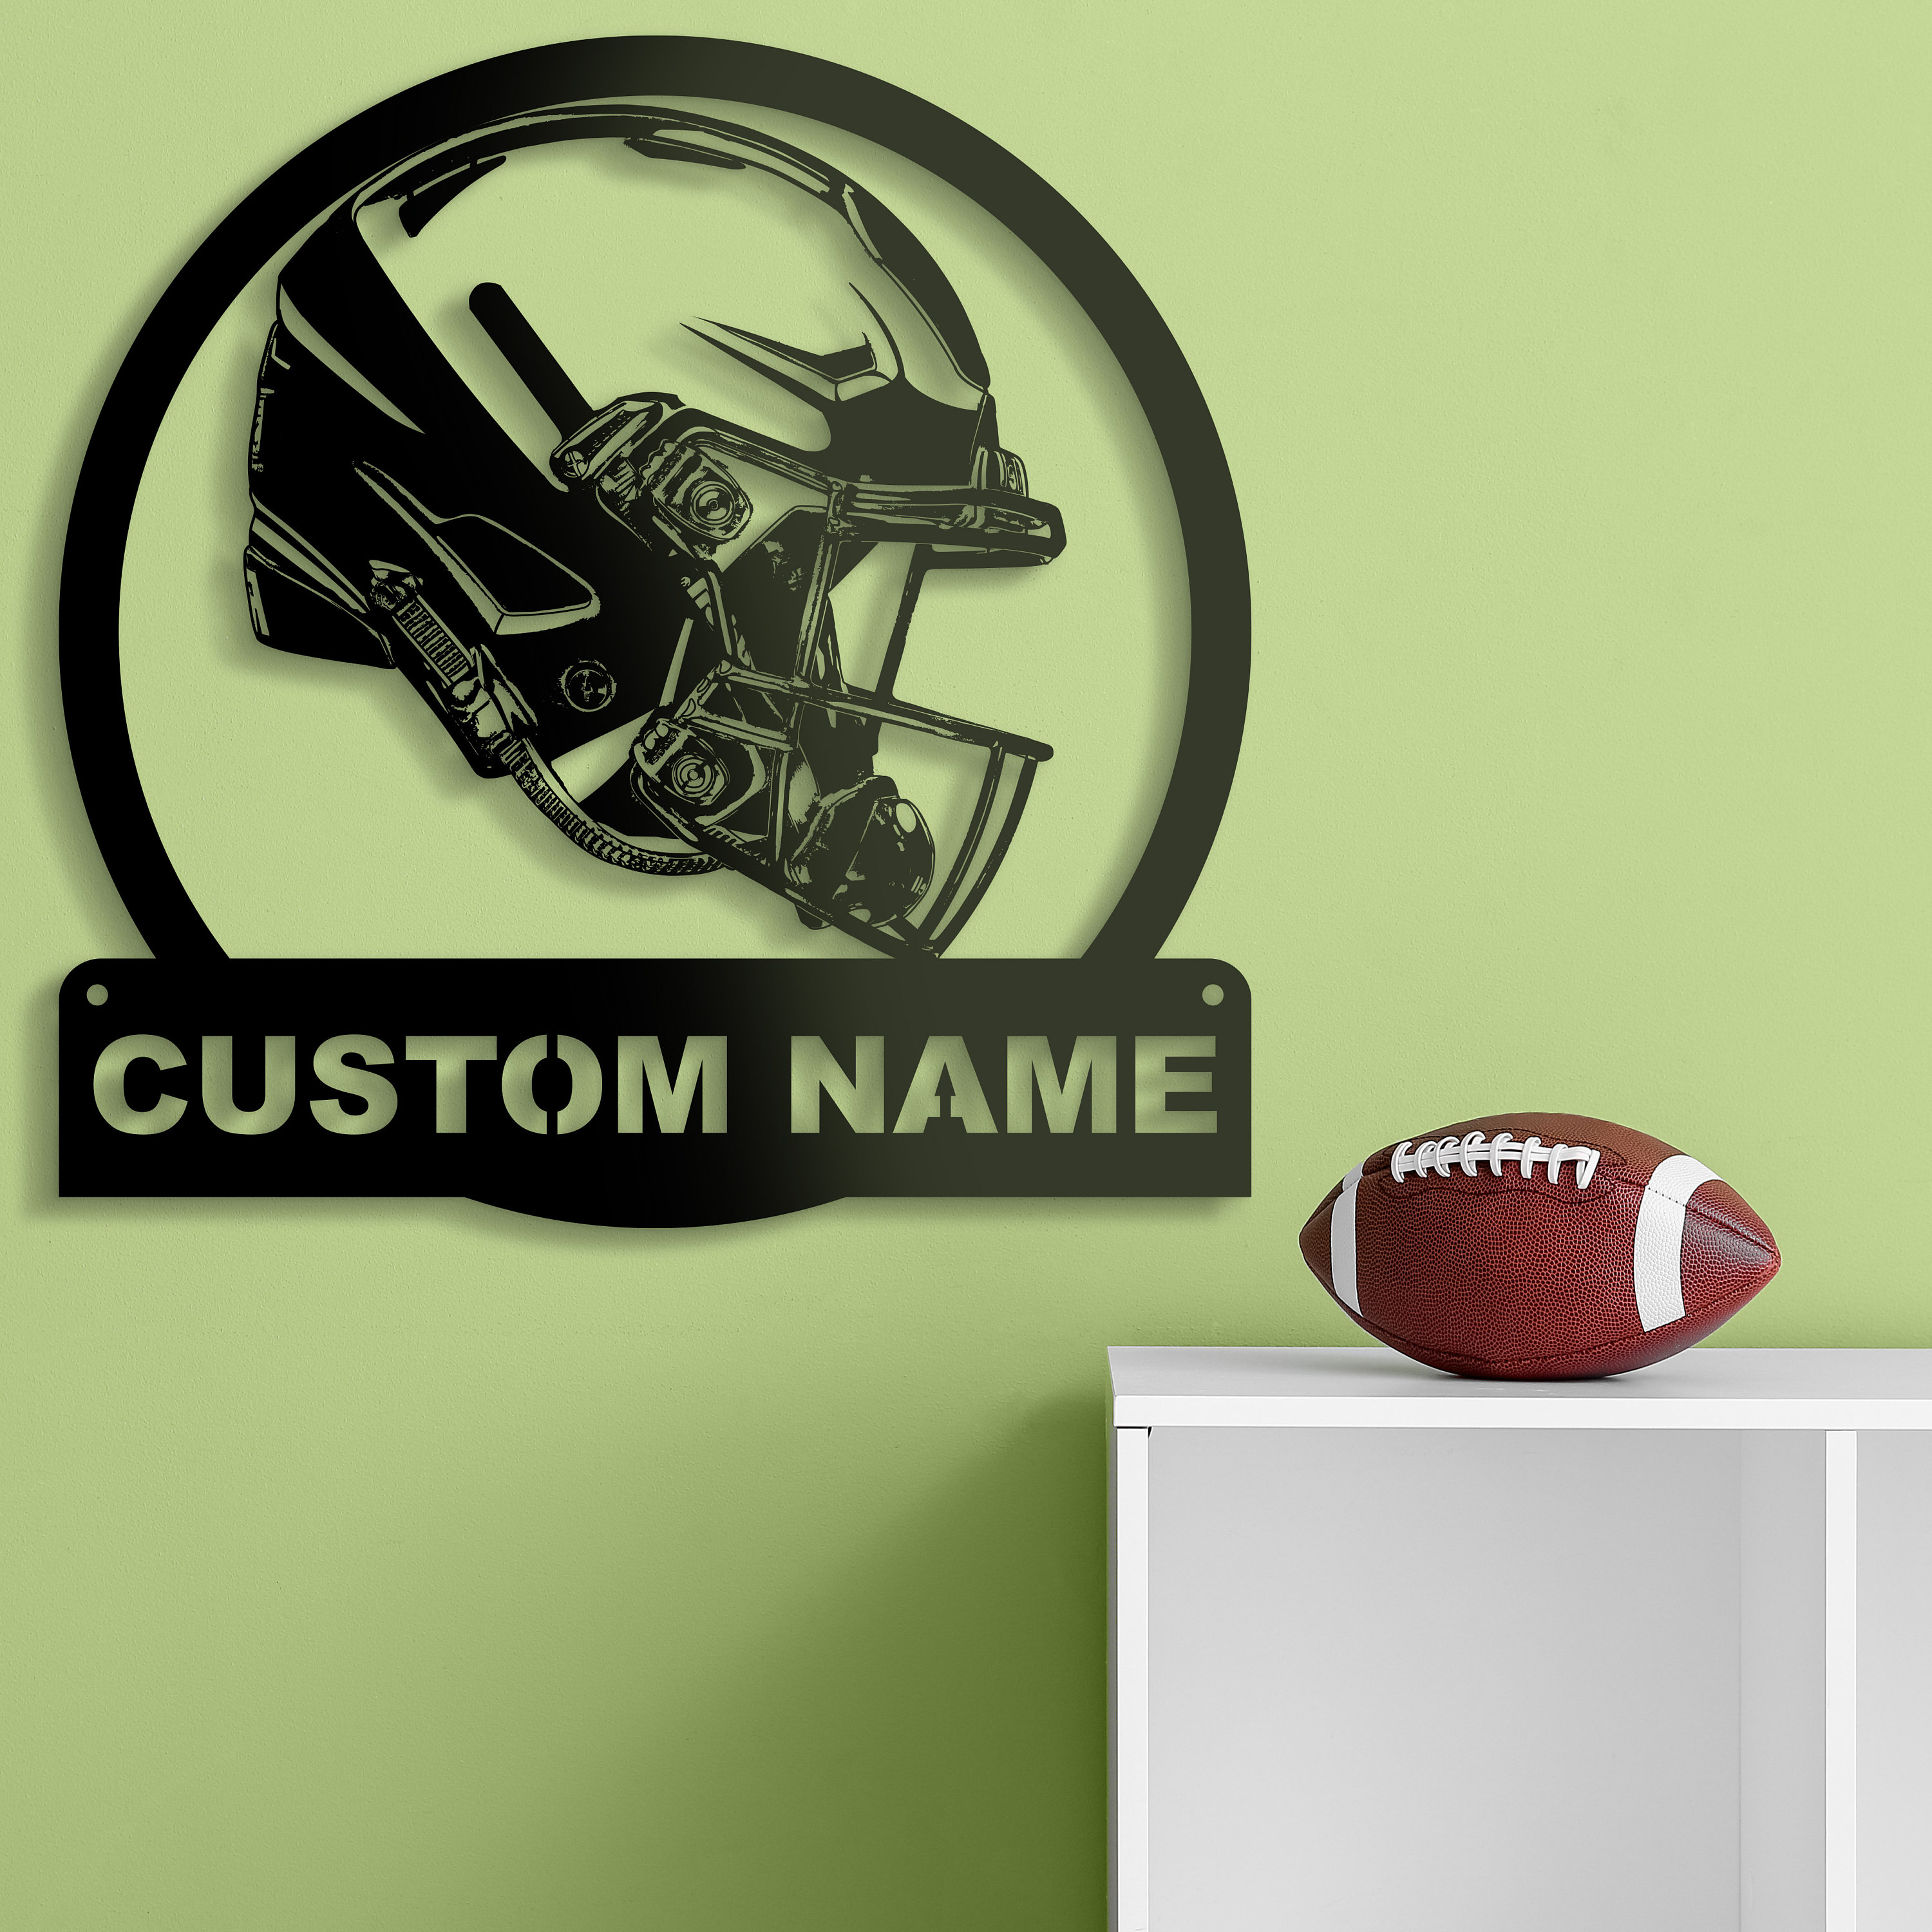 Personalized soccer helmet decorative wall art